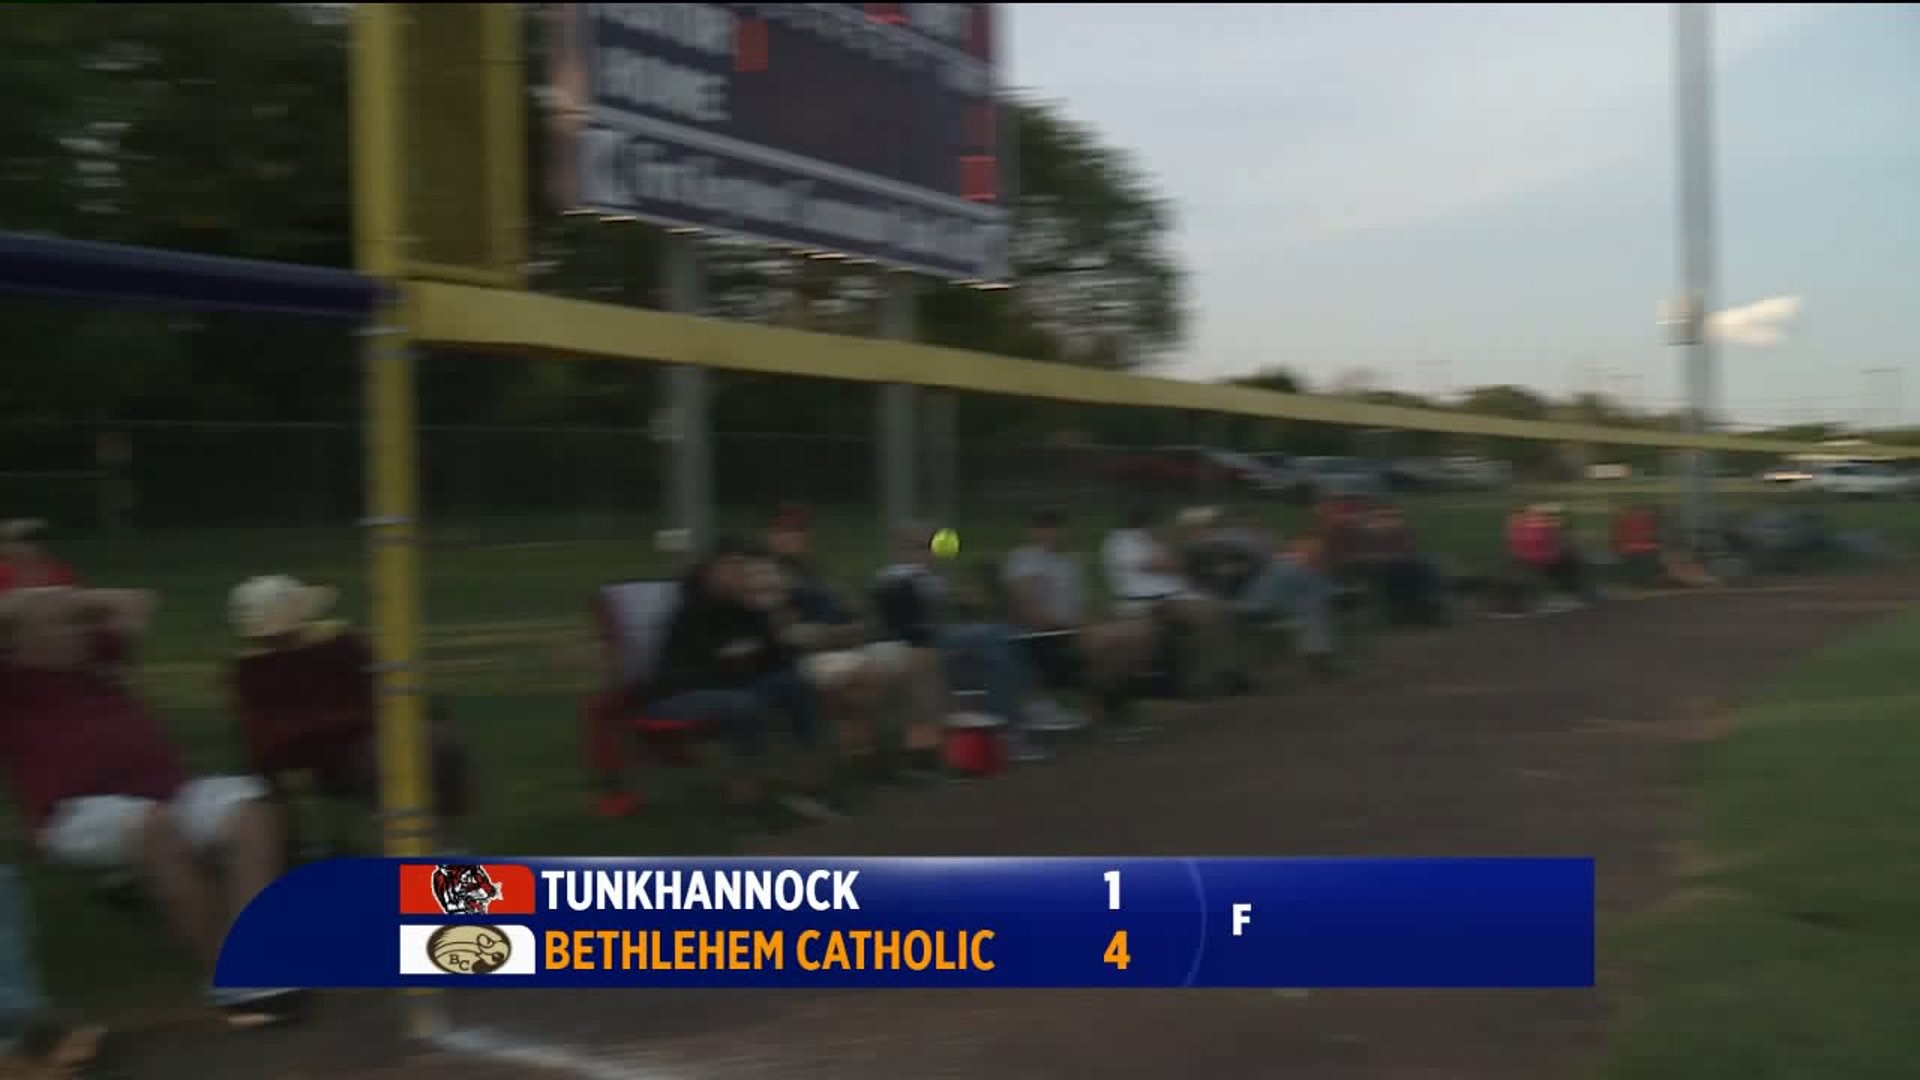 Tunkhannock vs Beth. Catholic softball